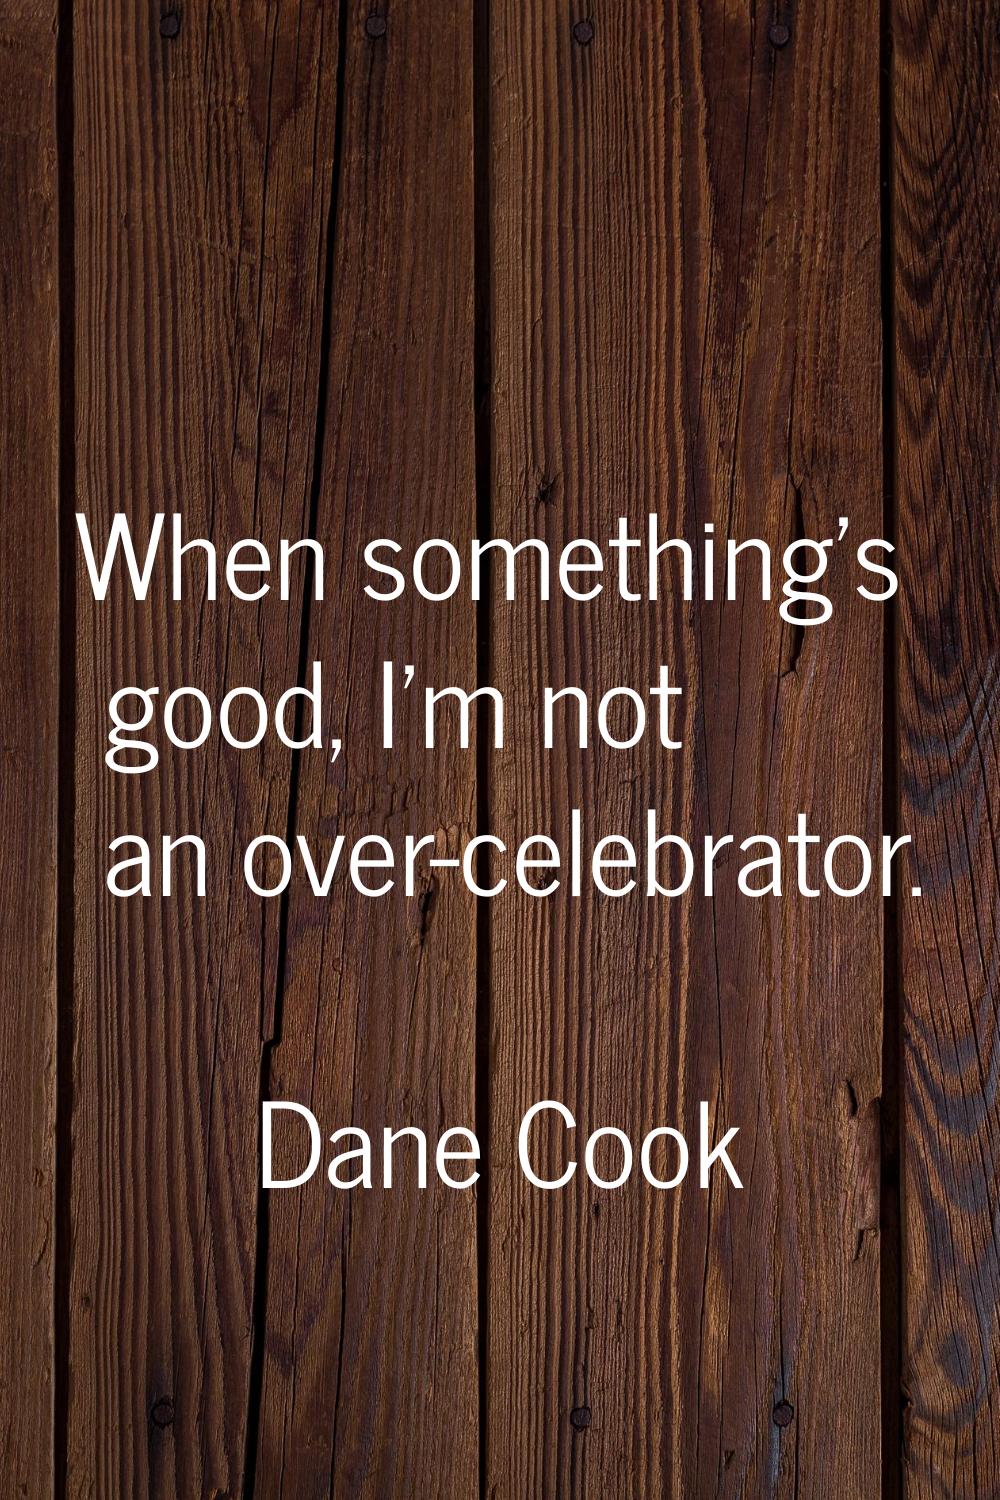 When something's good, I'm not an over-celebrator.